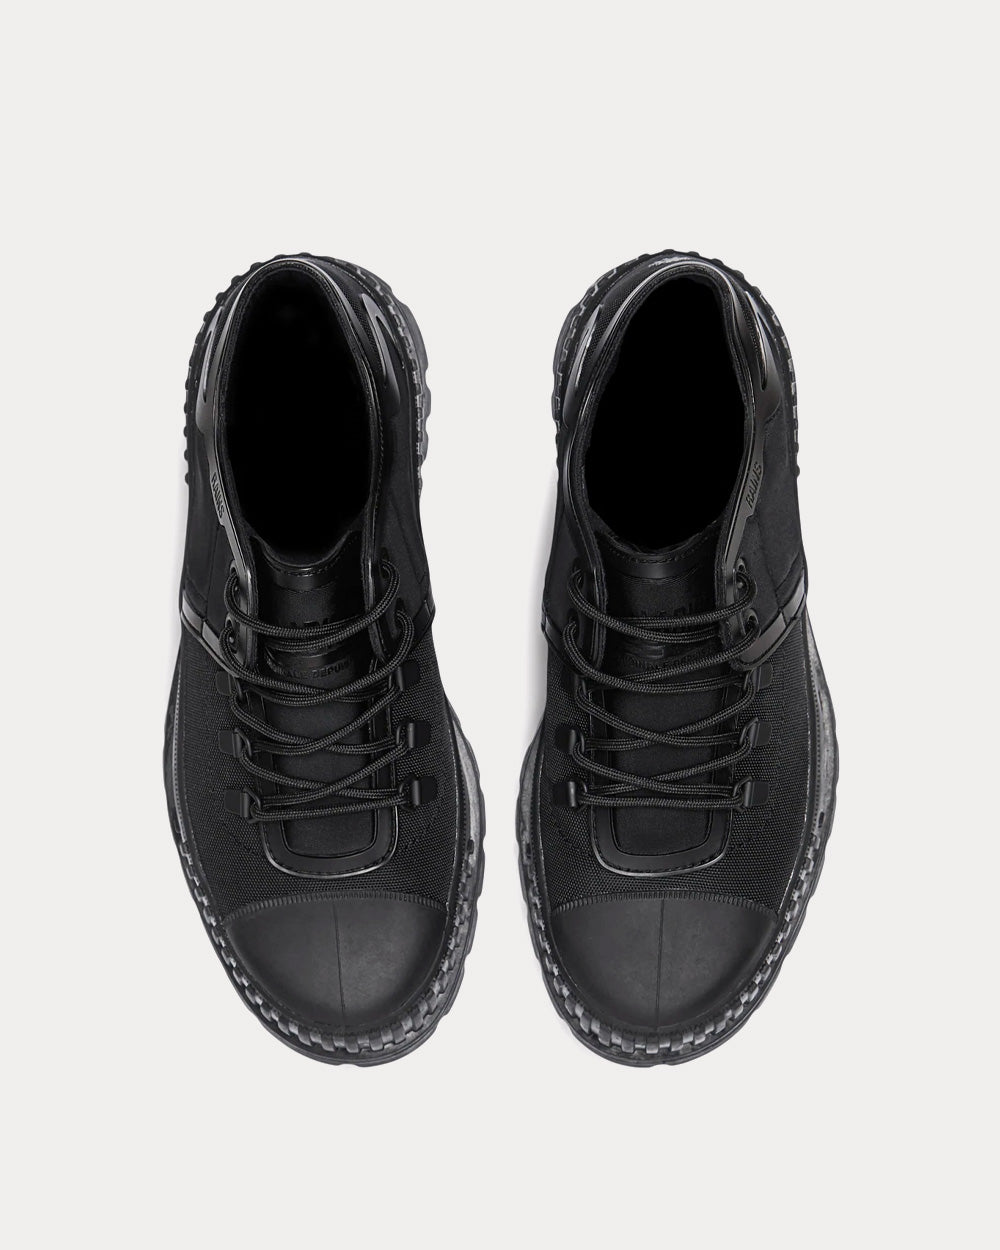 Palladium x Rains - Pallashock HKR Rains Black Low Top Sneakers